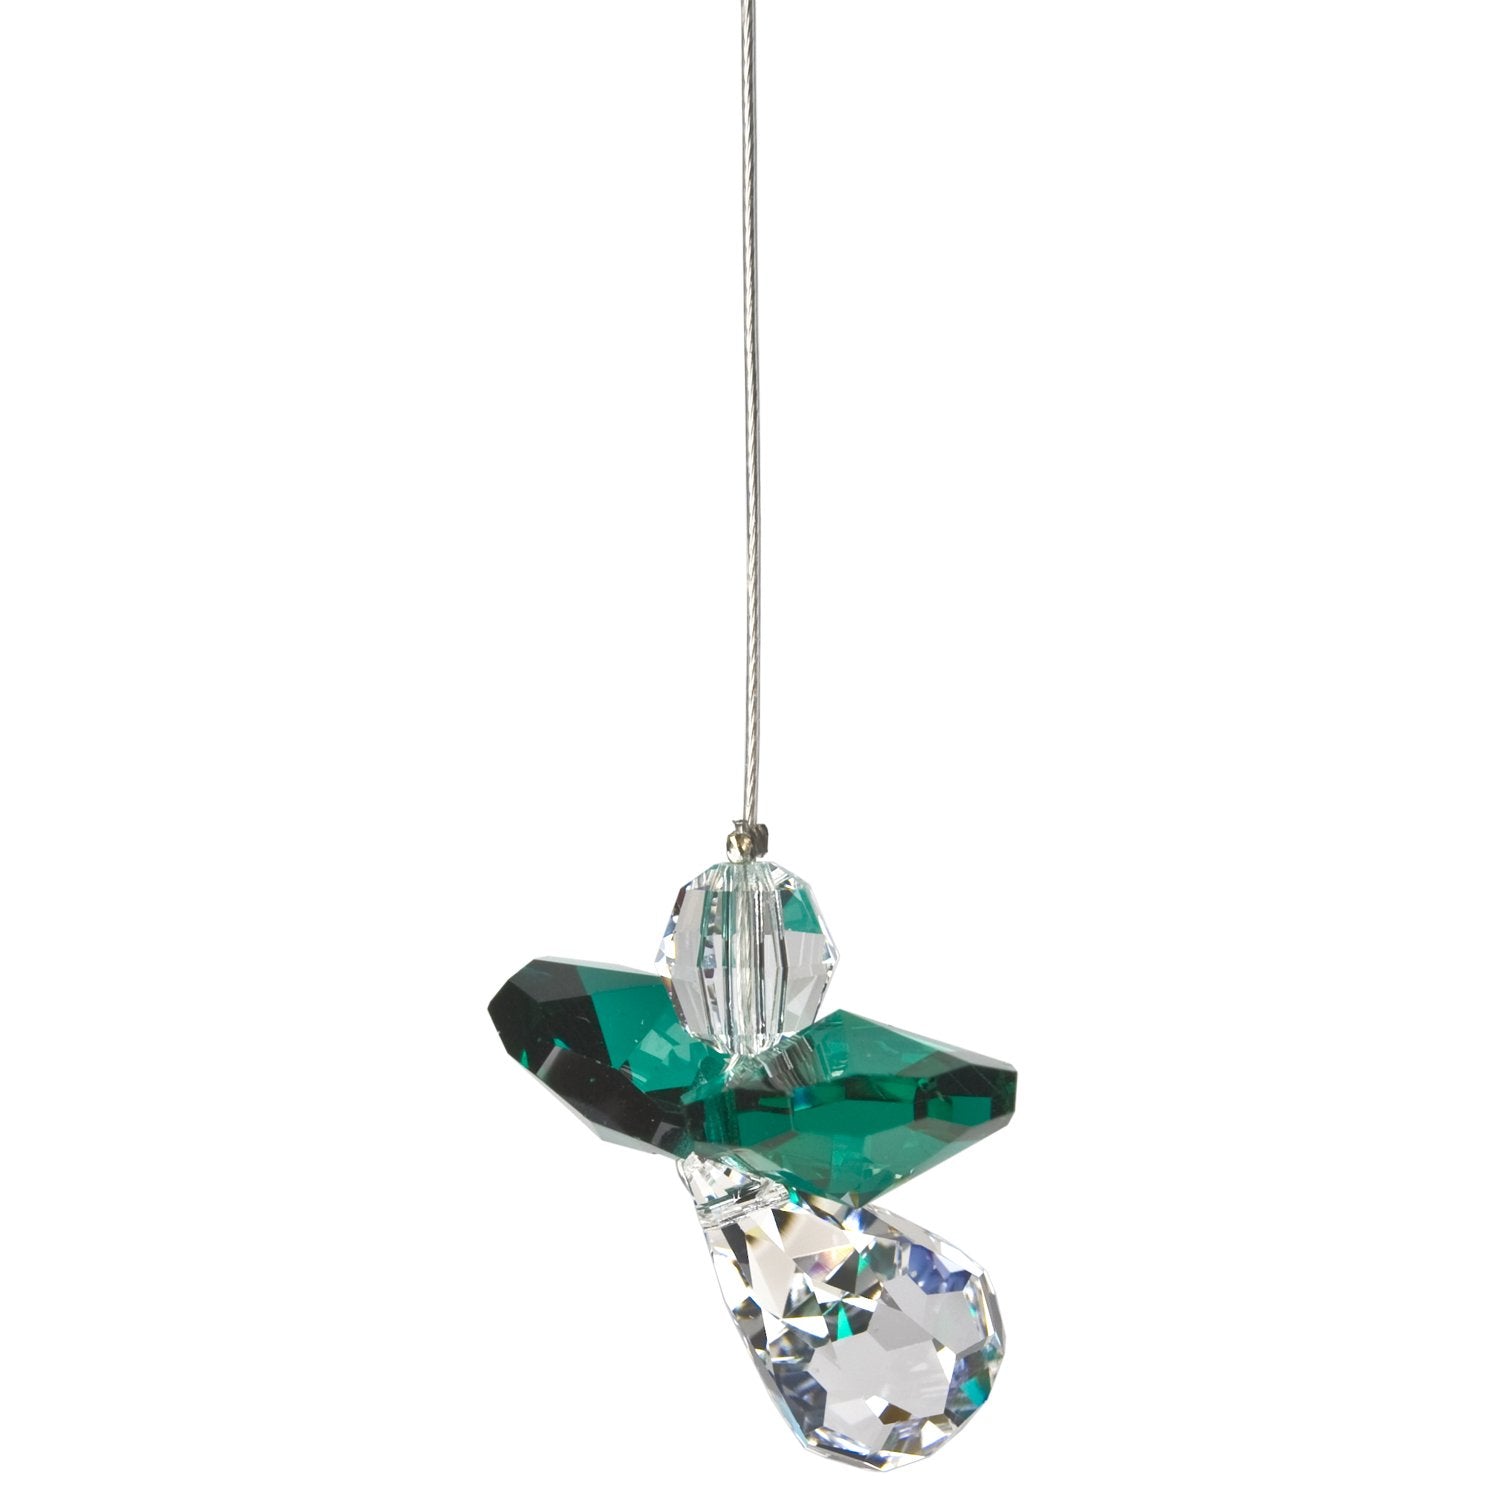 Crystal Guardian Angel Suncatcher - Emerald (May) alternate product image